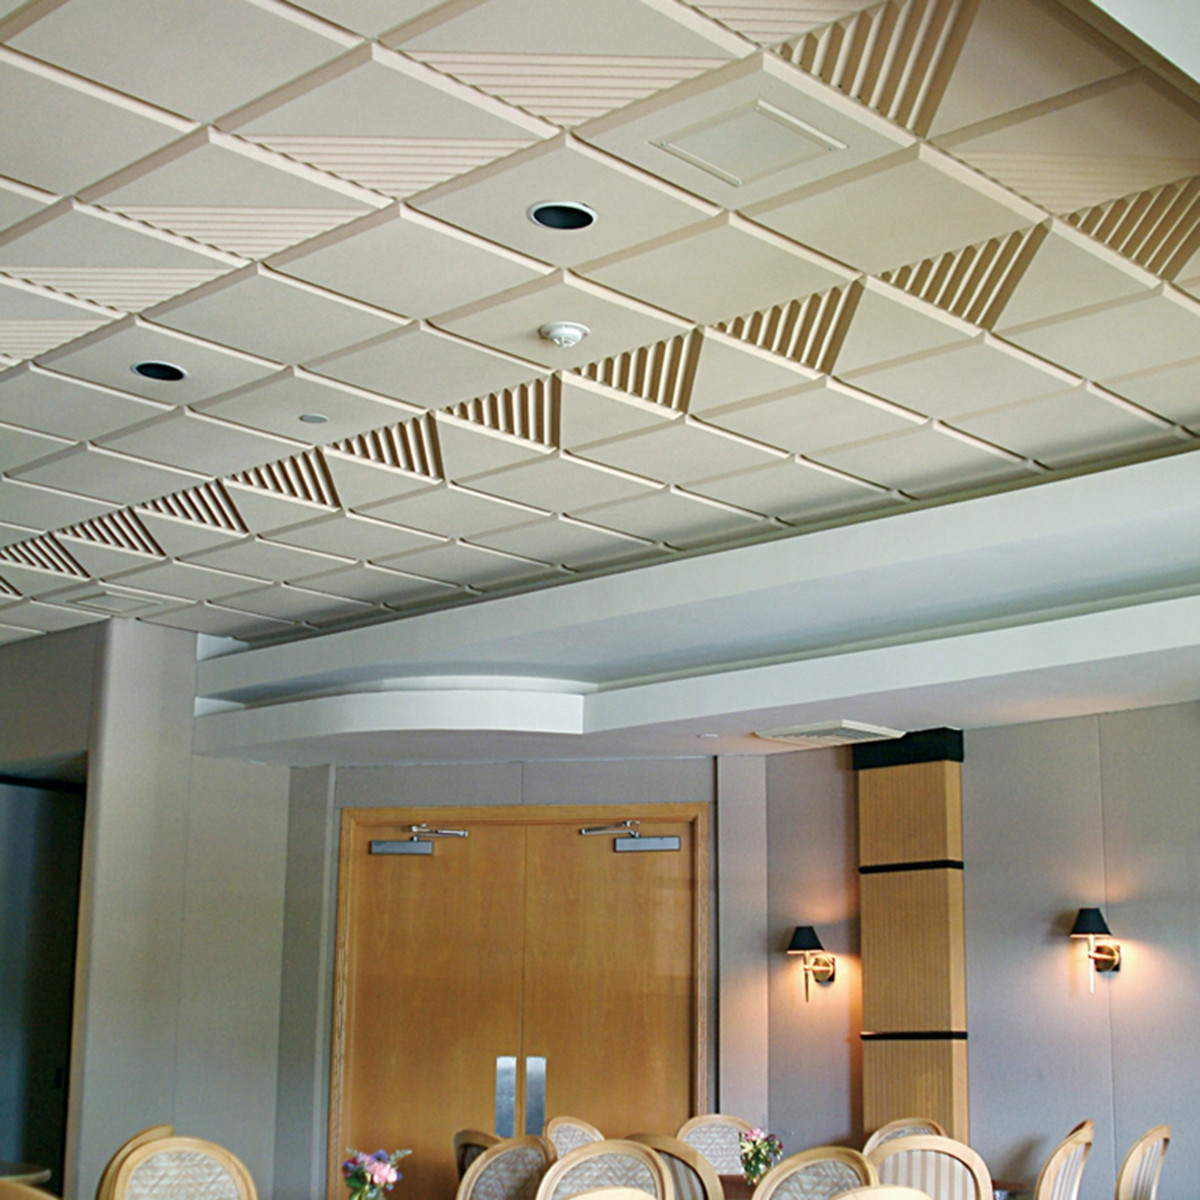 Sound Dampening Ceiling Tiles Sound Dampening Ceiling Tiles sonex contour ceiling tile acoustical solutions 1200 X 1200